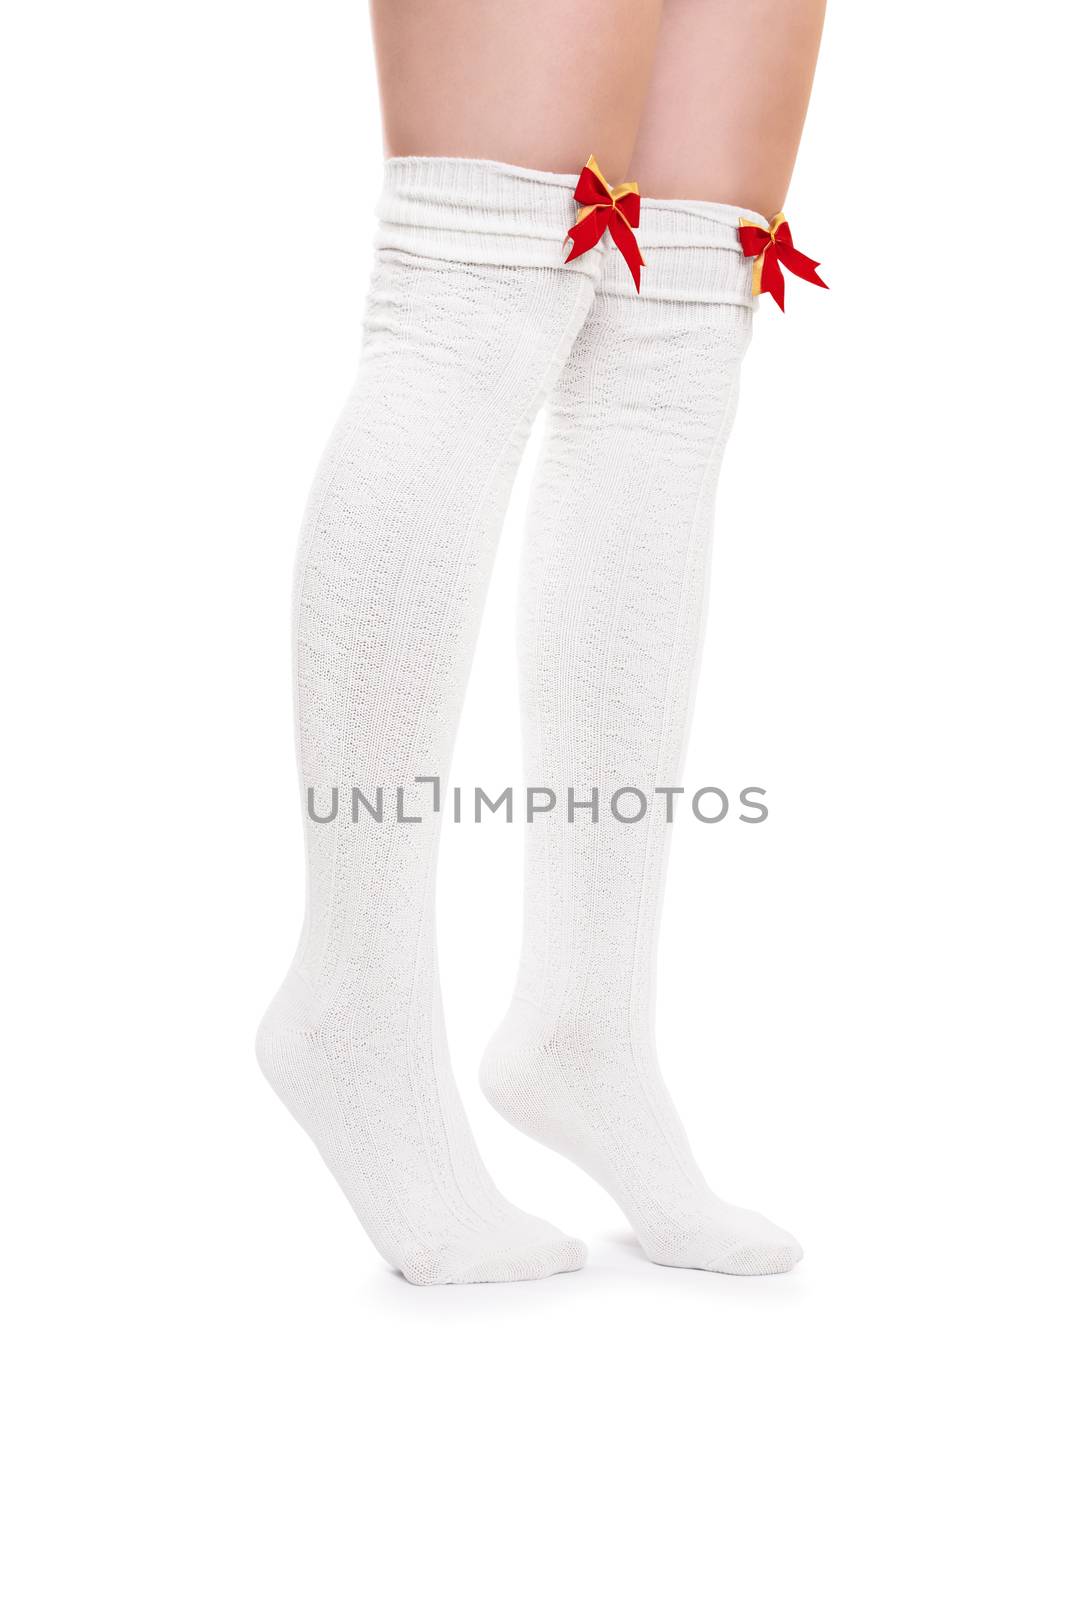 Female legs in white stockings tiptoeing by Mendelex